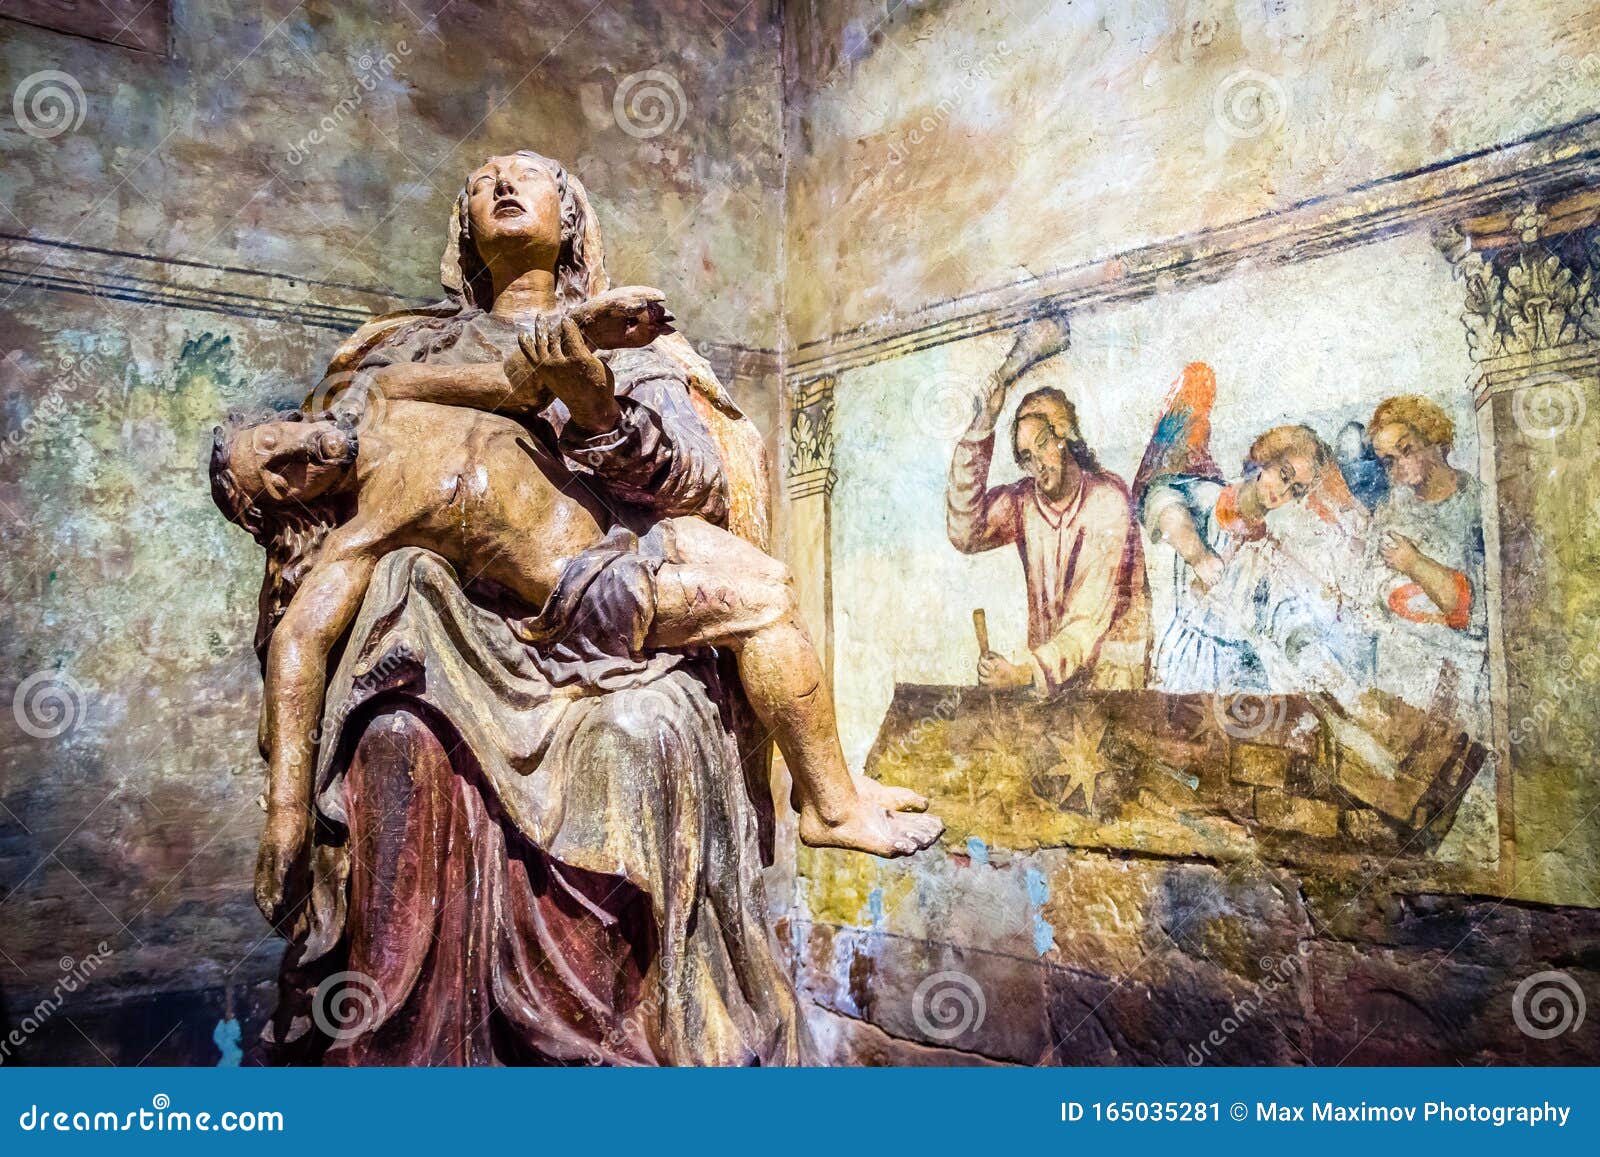 santa rosa, misiones, paraguay - original frescos and wooden statue in the jesuit church in santa rosa